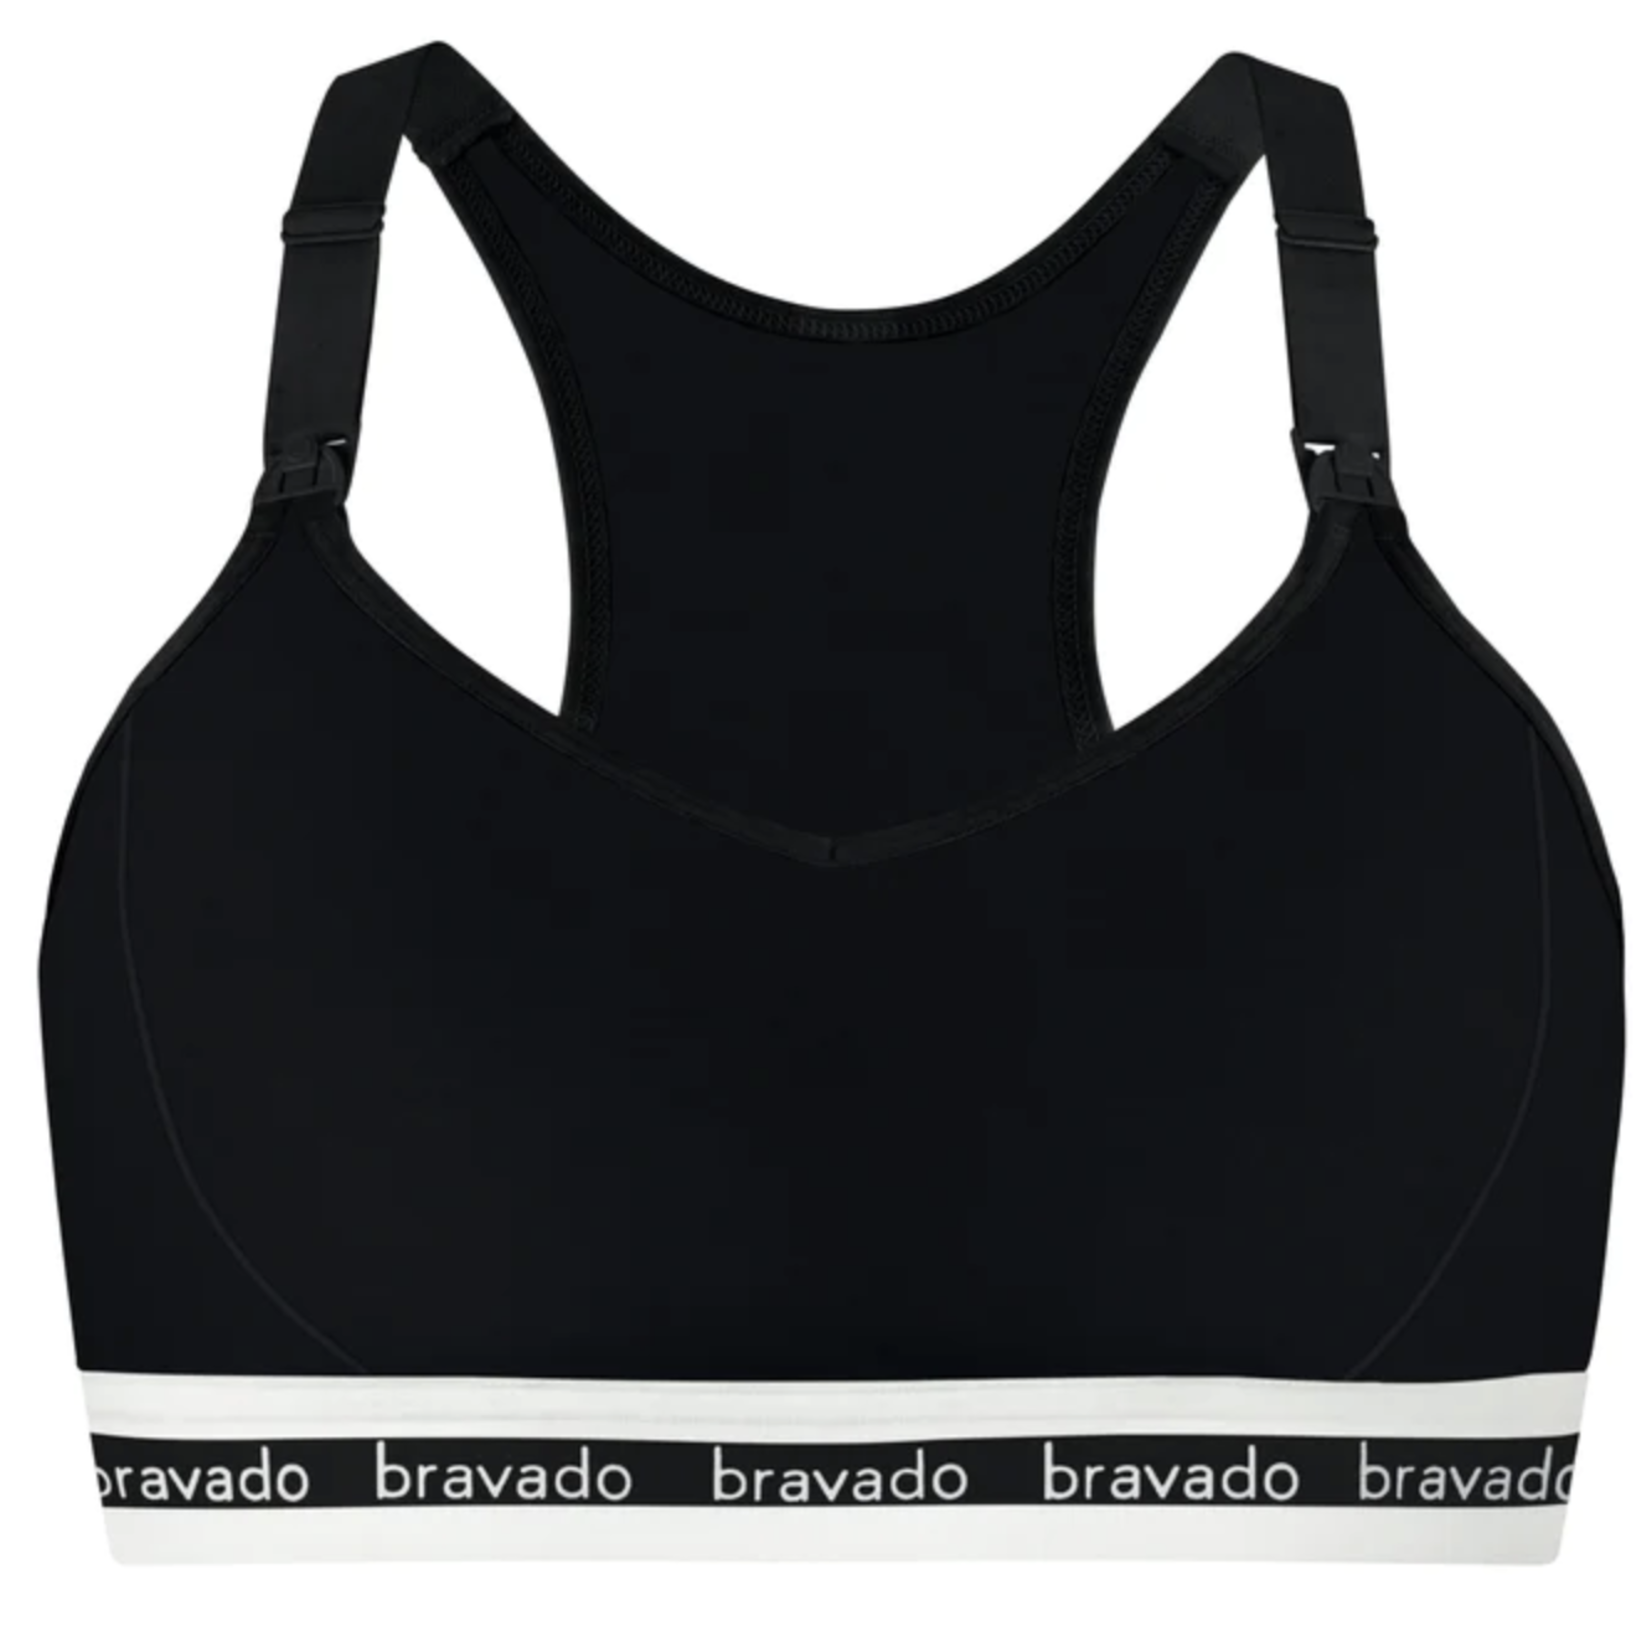 Bravado Designs Original Pumping & Nursing Bra (2-in-1) in Black